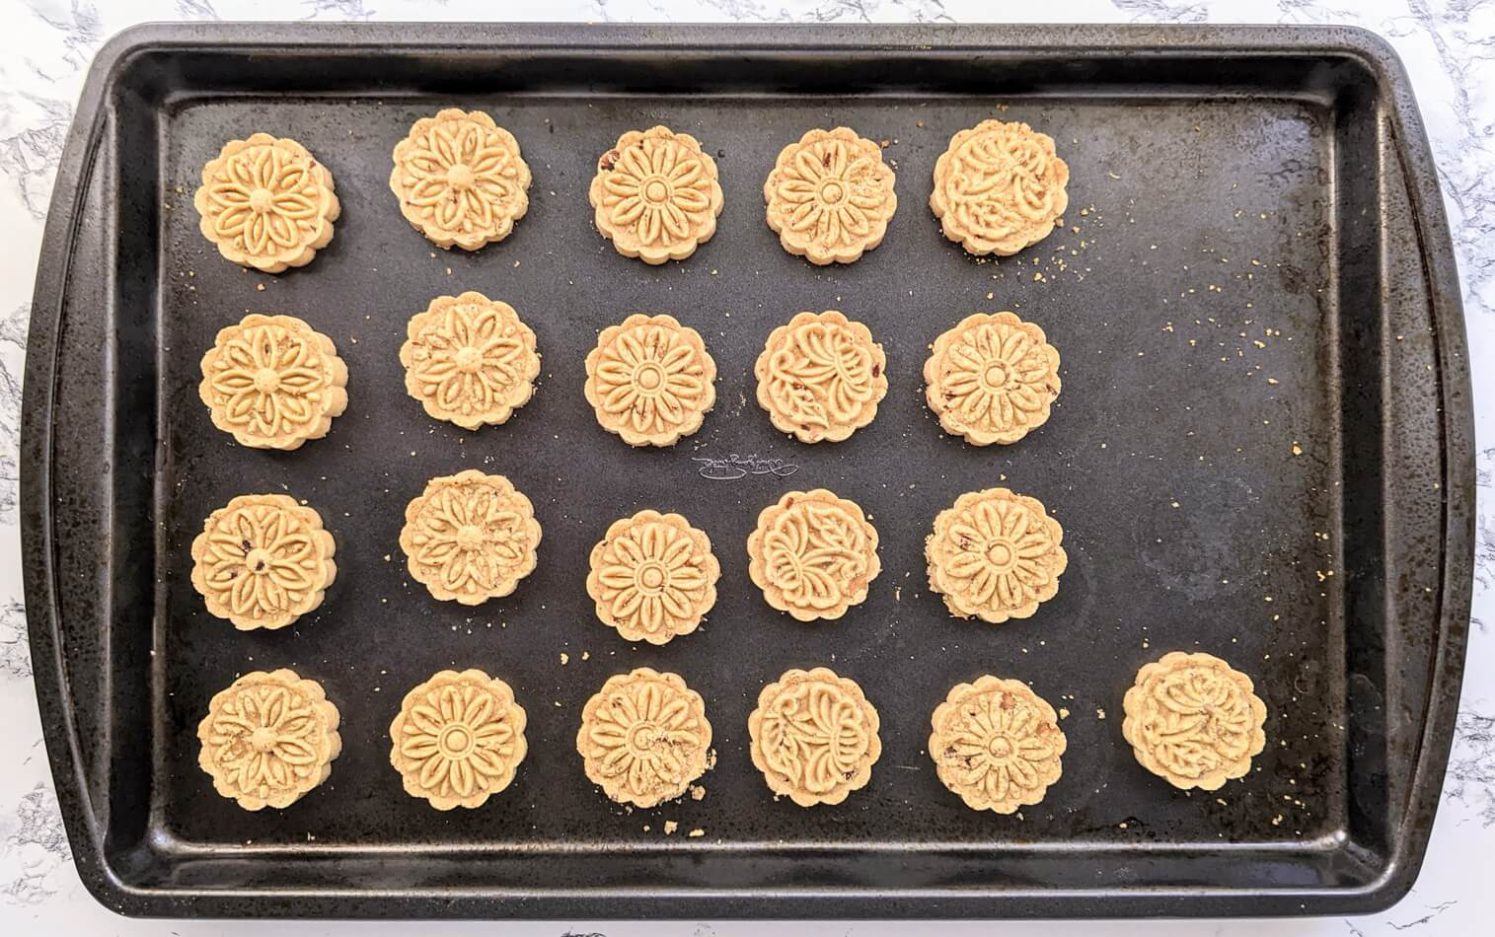 Macau almond cookies shaped